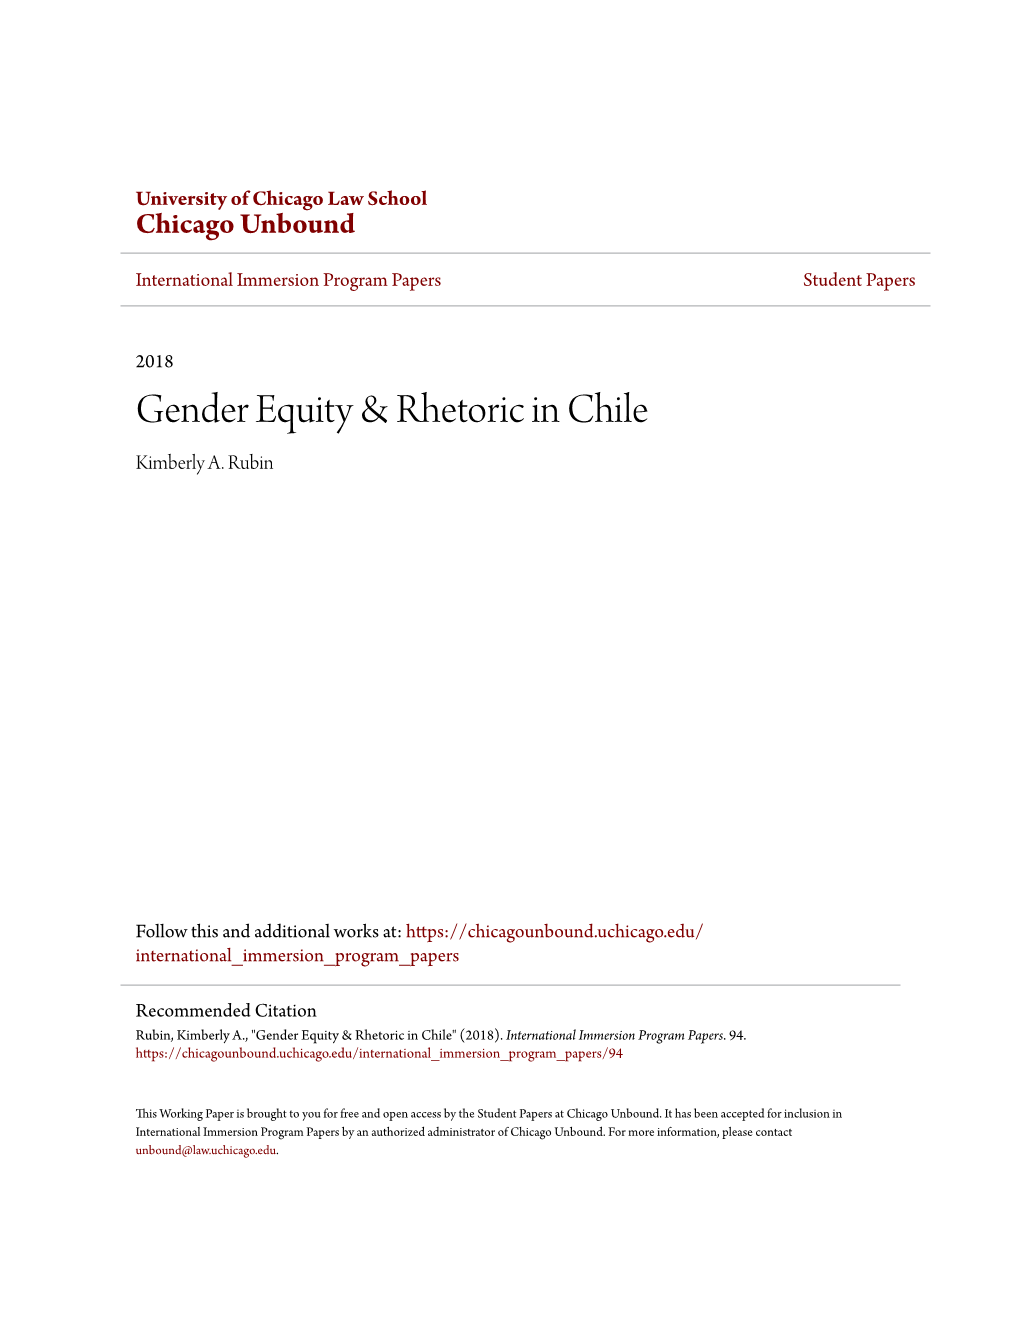 Gender Equity & Rhetoric in Chile